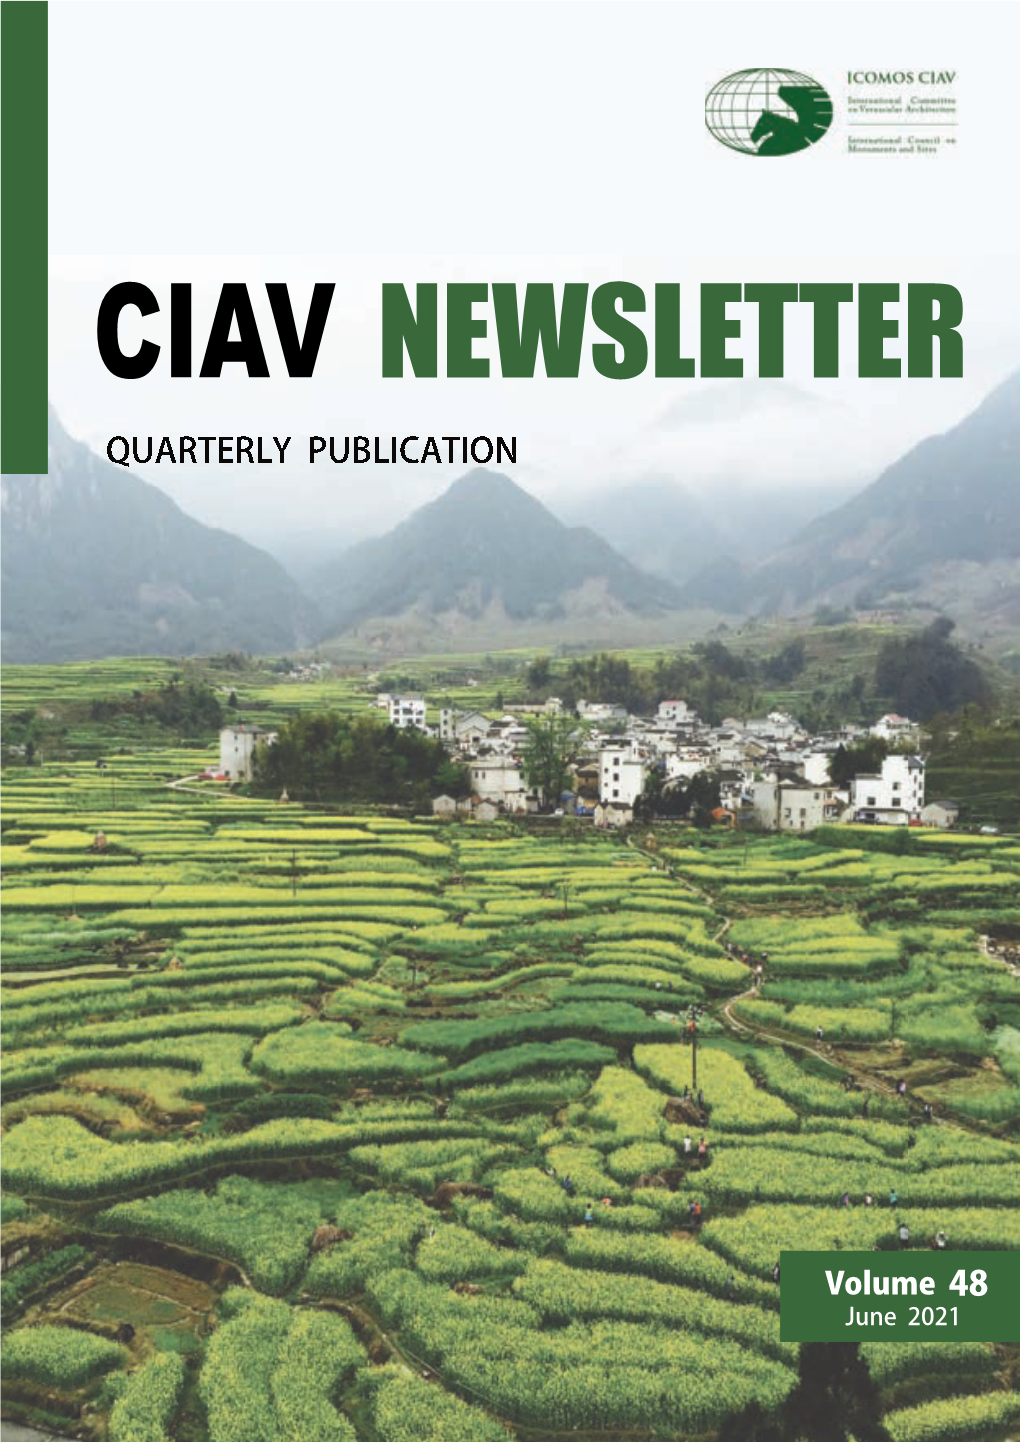 Download the CIAV NEWSLETTER 2021/48